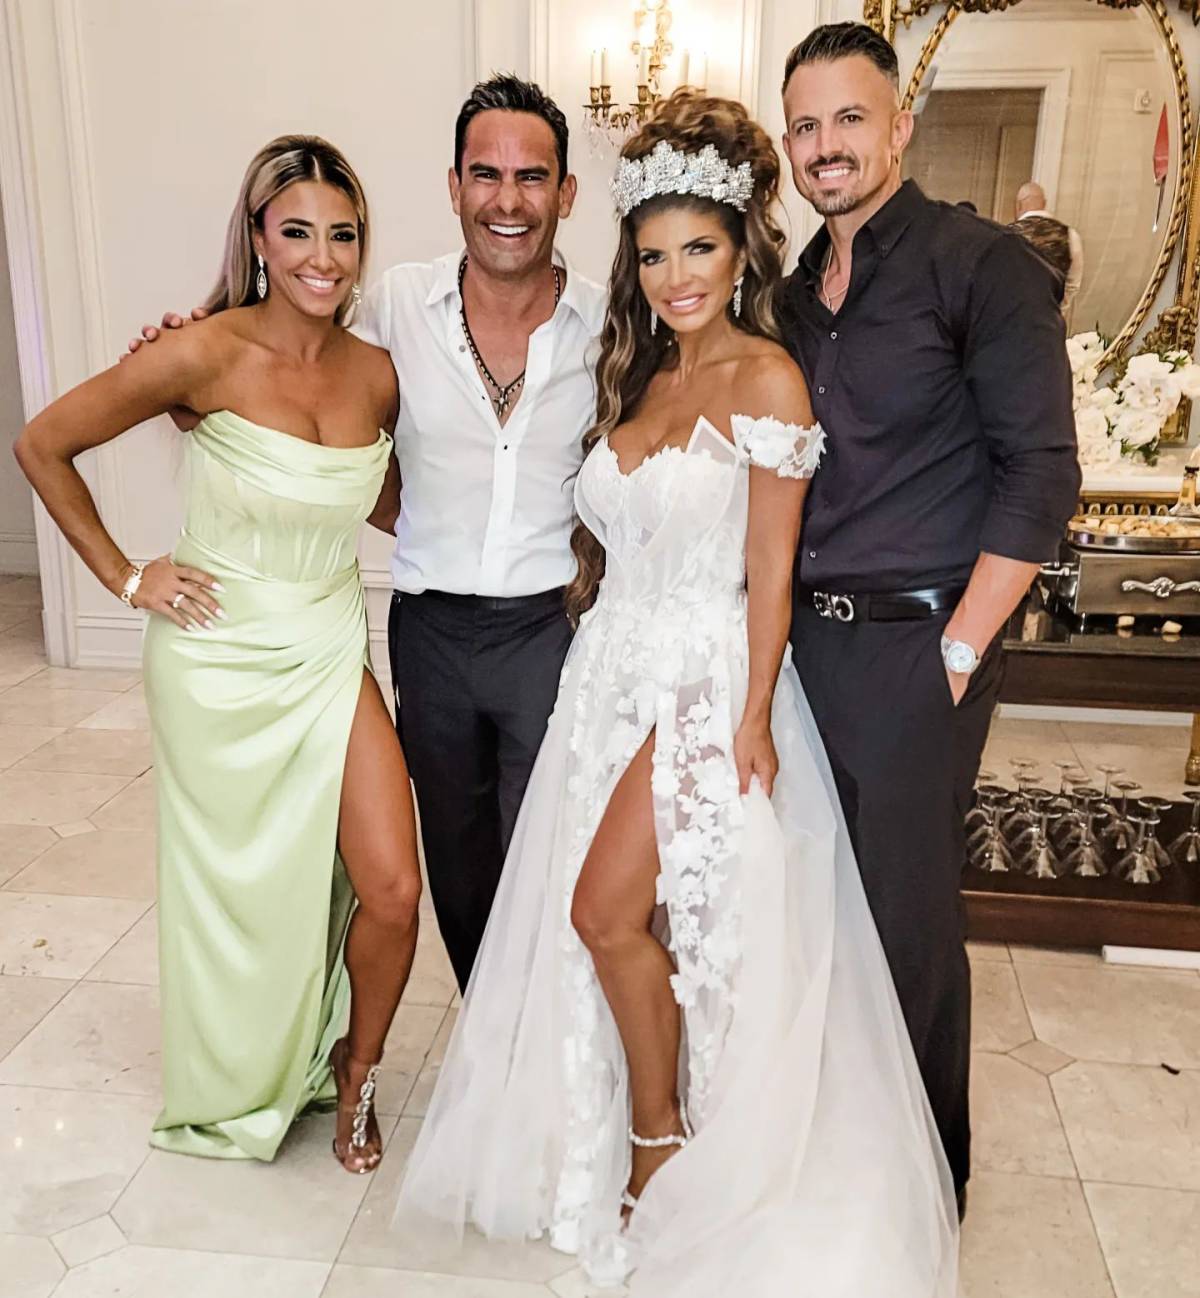 Teresa Giudice Gets Married To Luis Ruelas in Glamorous Wedding Ceremony